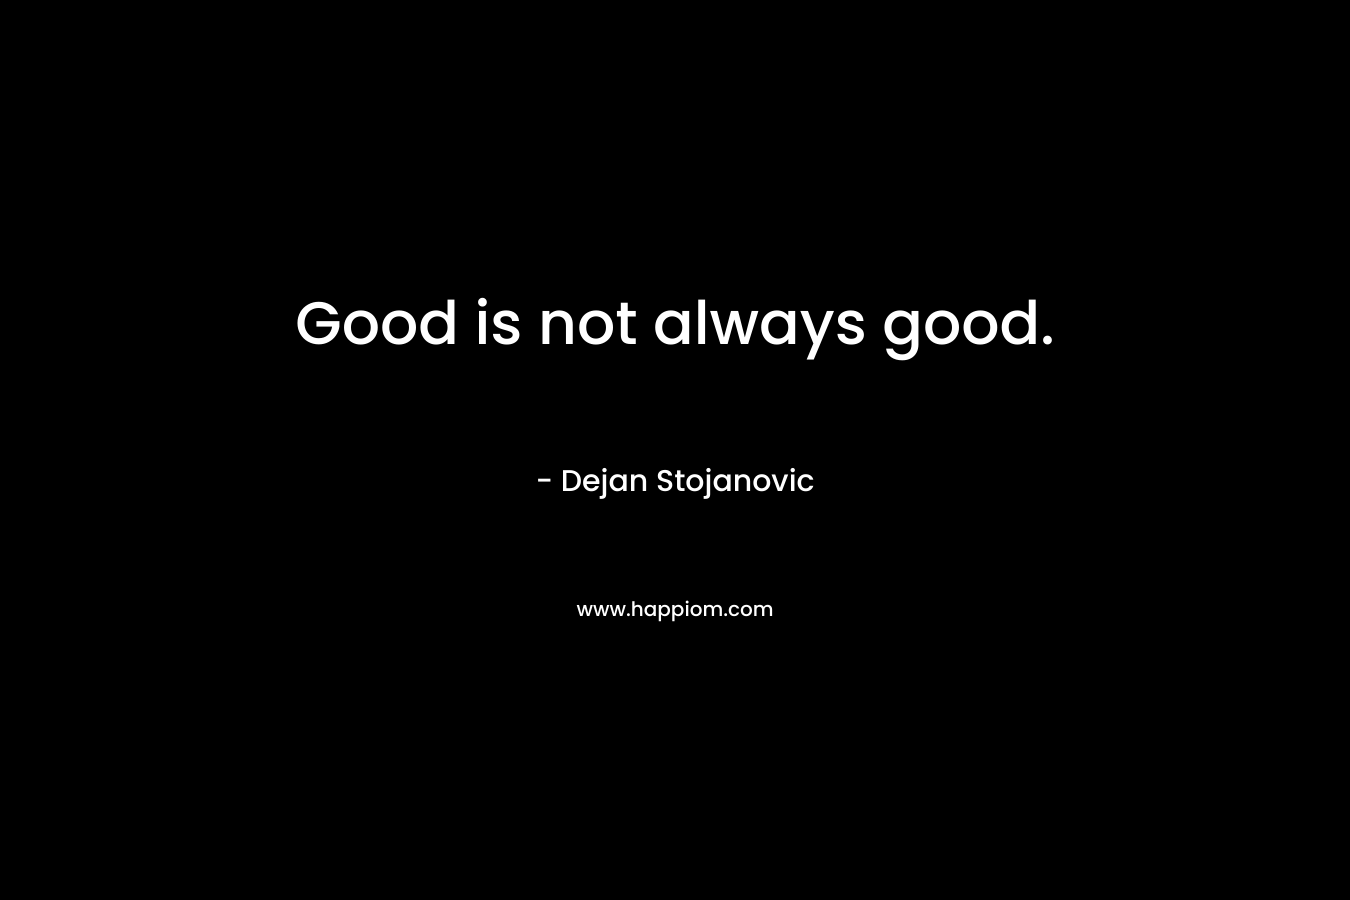 Good is not always good. – Dejan Stojanovic